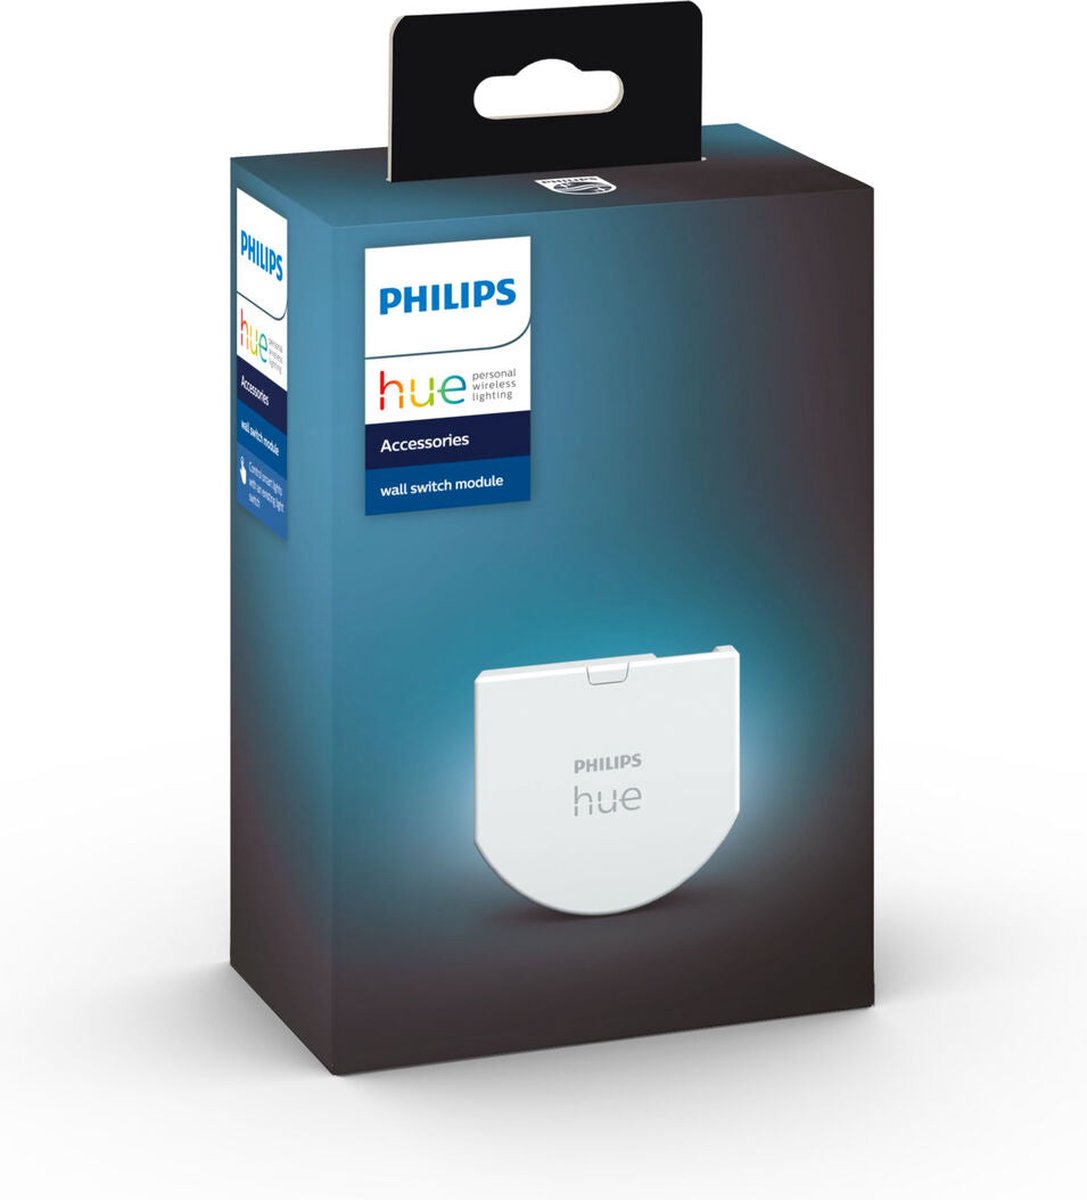 bende longontsteking opzettelijk Philips Hue wall switch module slimme verlichting accessoire - 1 stuk |  bol.com